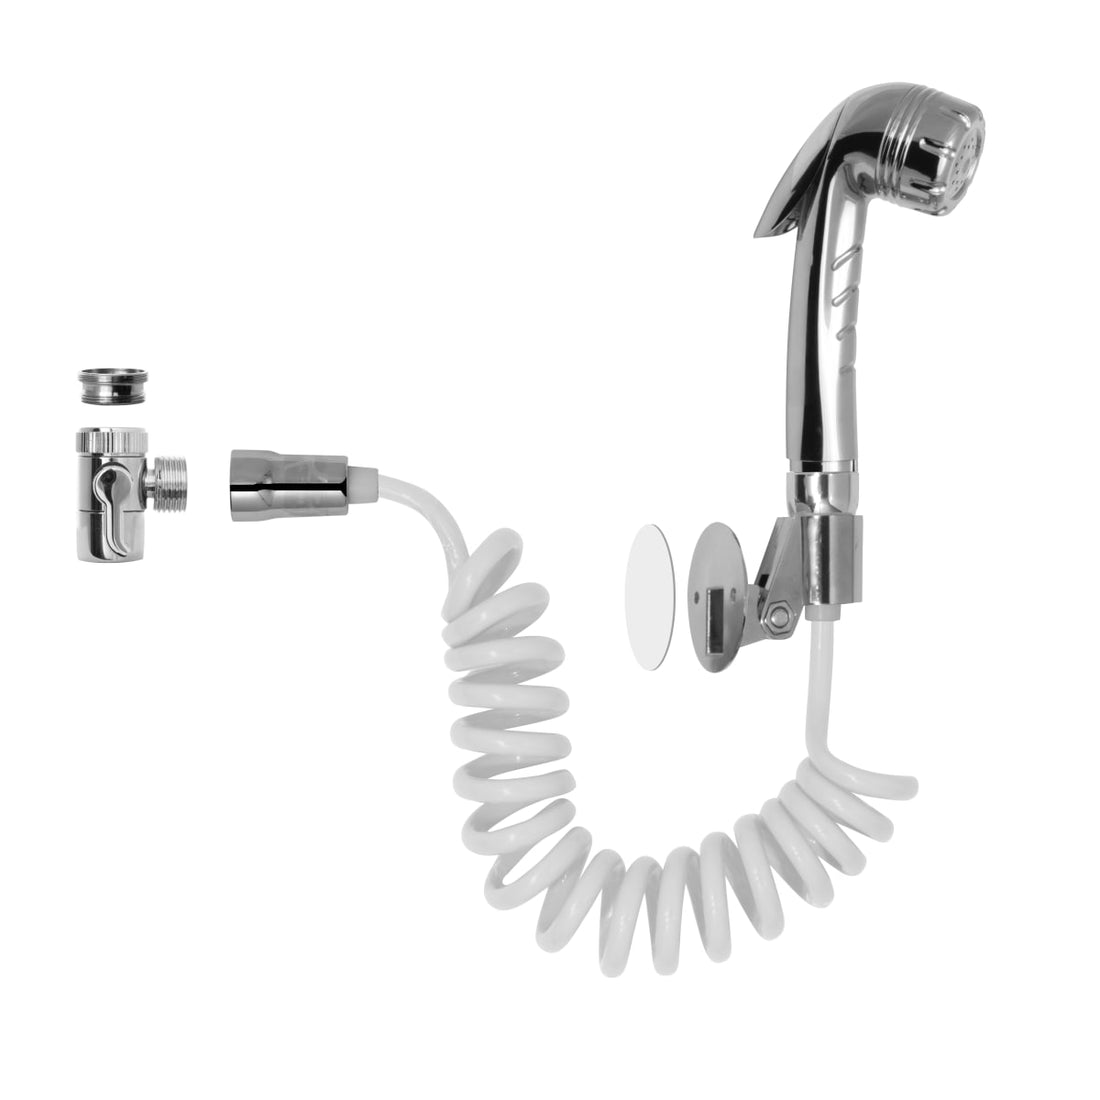 DUPLEX SALLY CROMATO hand shower, spring hose, wall bracket and diverter